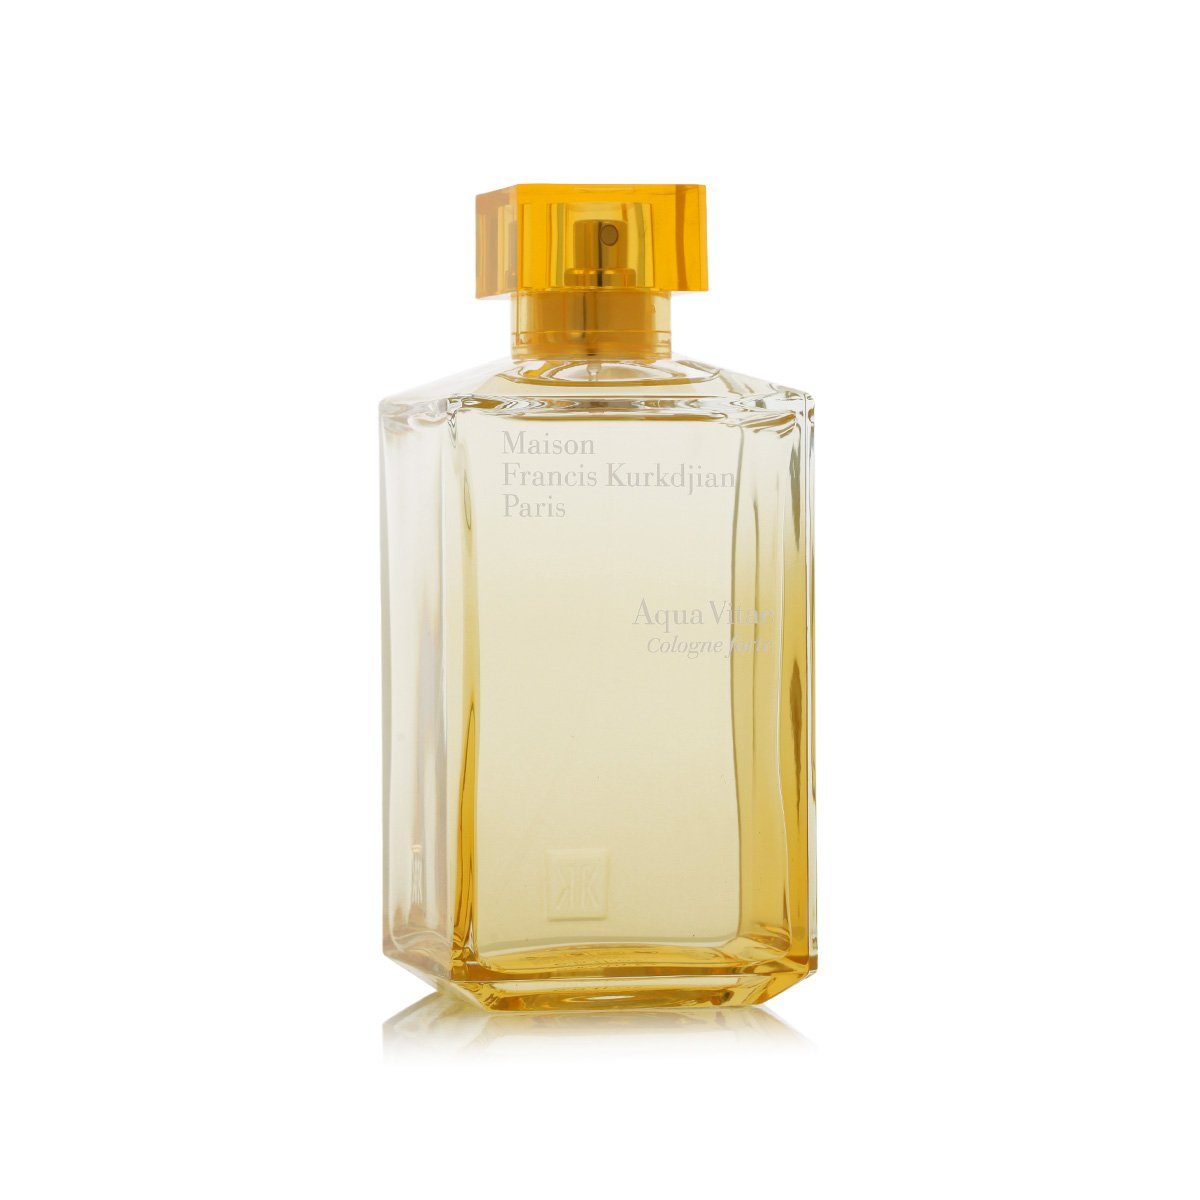 Maison Francis Kurkdjian Eau Aqua Forte Cologne Parfum de Vitae